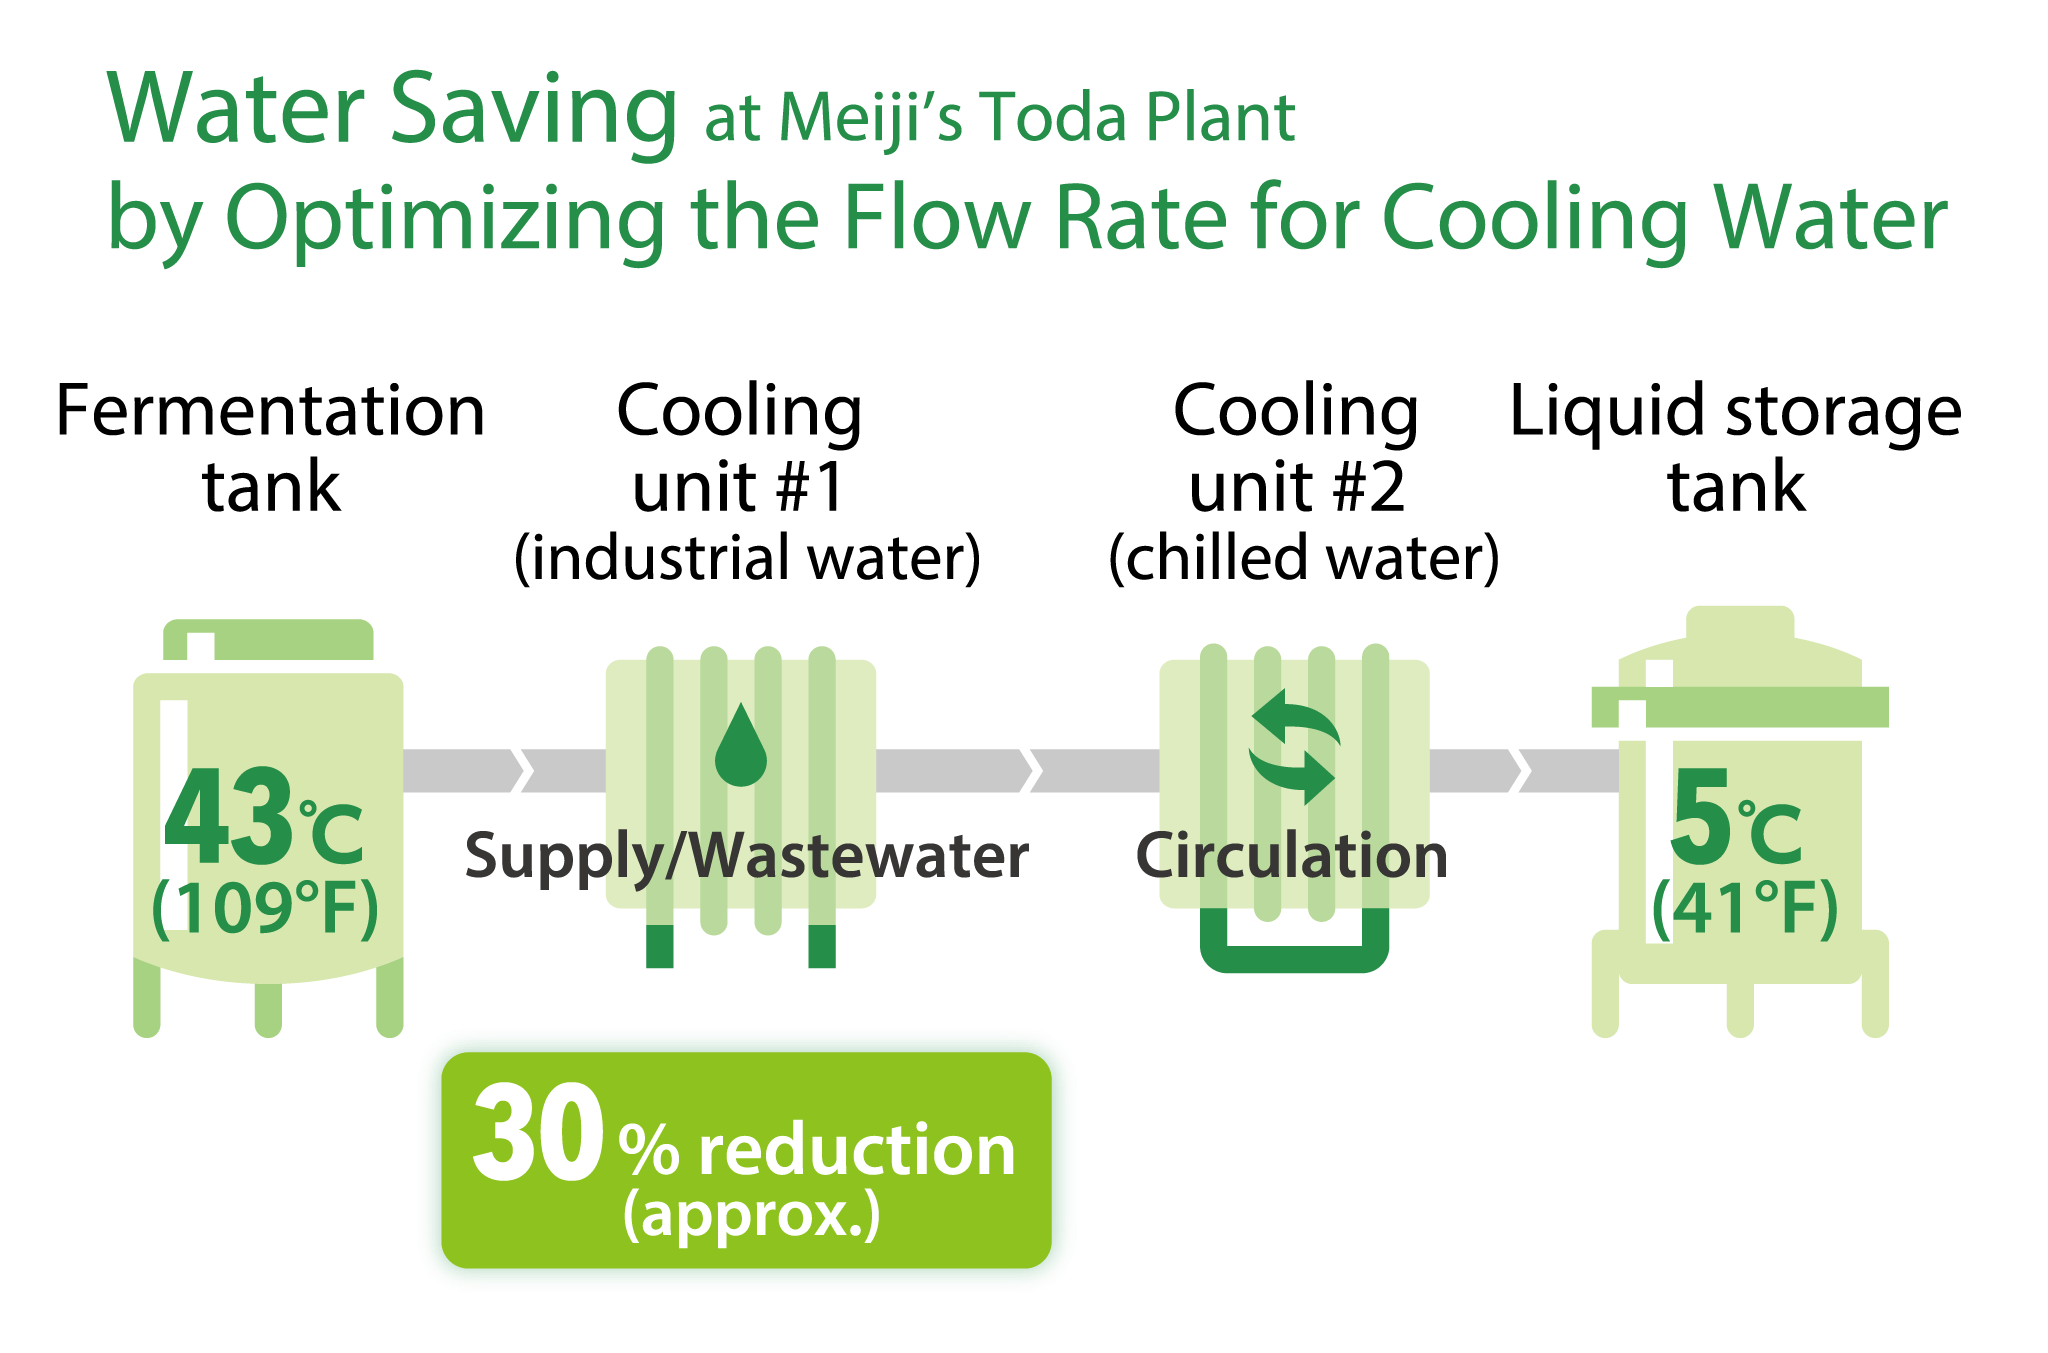 Figure: Water saving at Toda plant